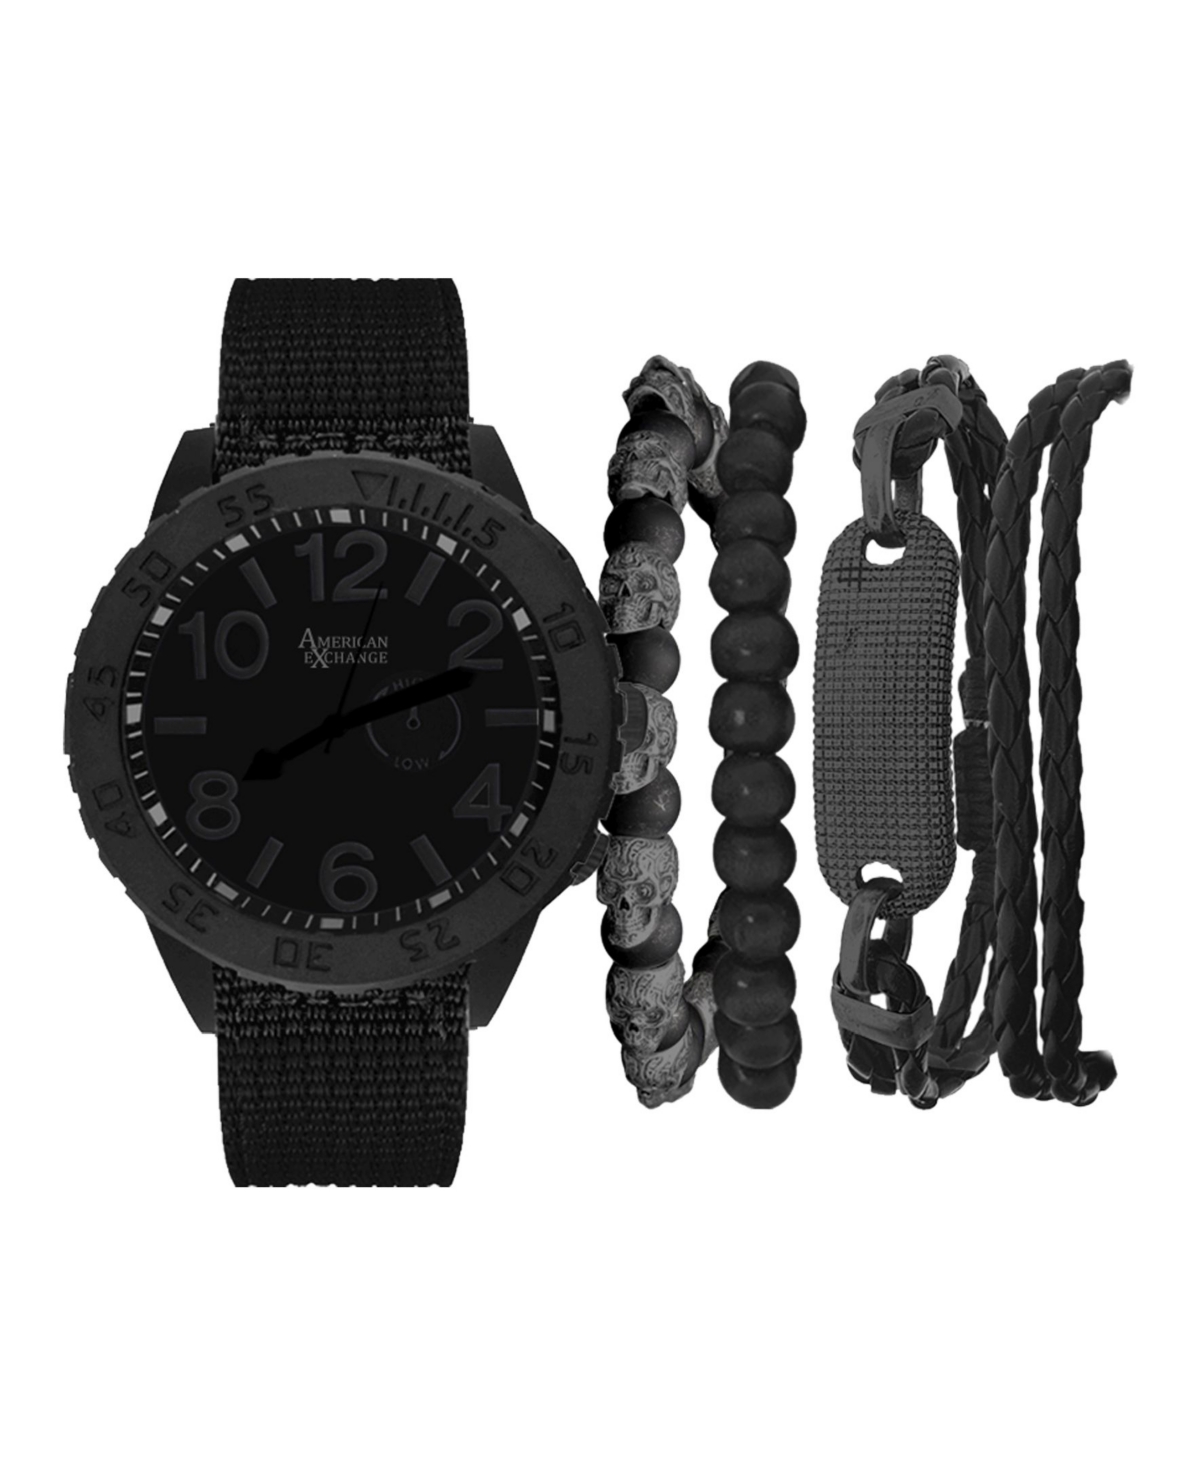 Men's Quartz Dial Black Fabric Strap Watch and Assorted Black Stackable Bracelets Gift Set, Set of 5 - Black